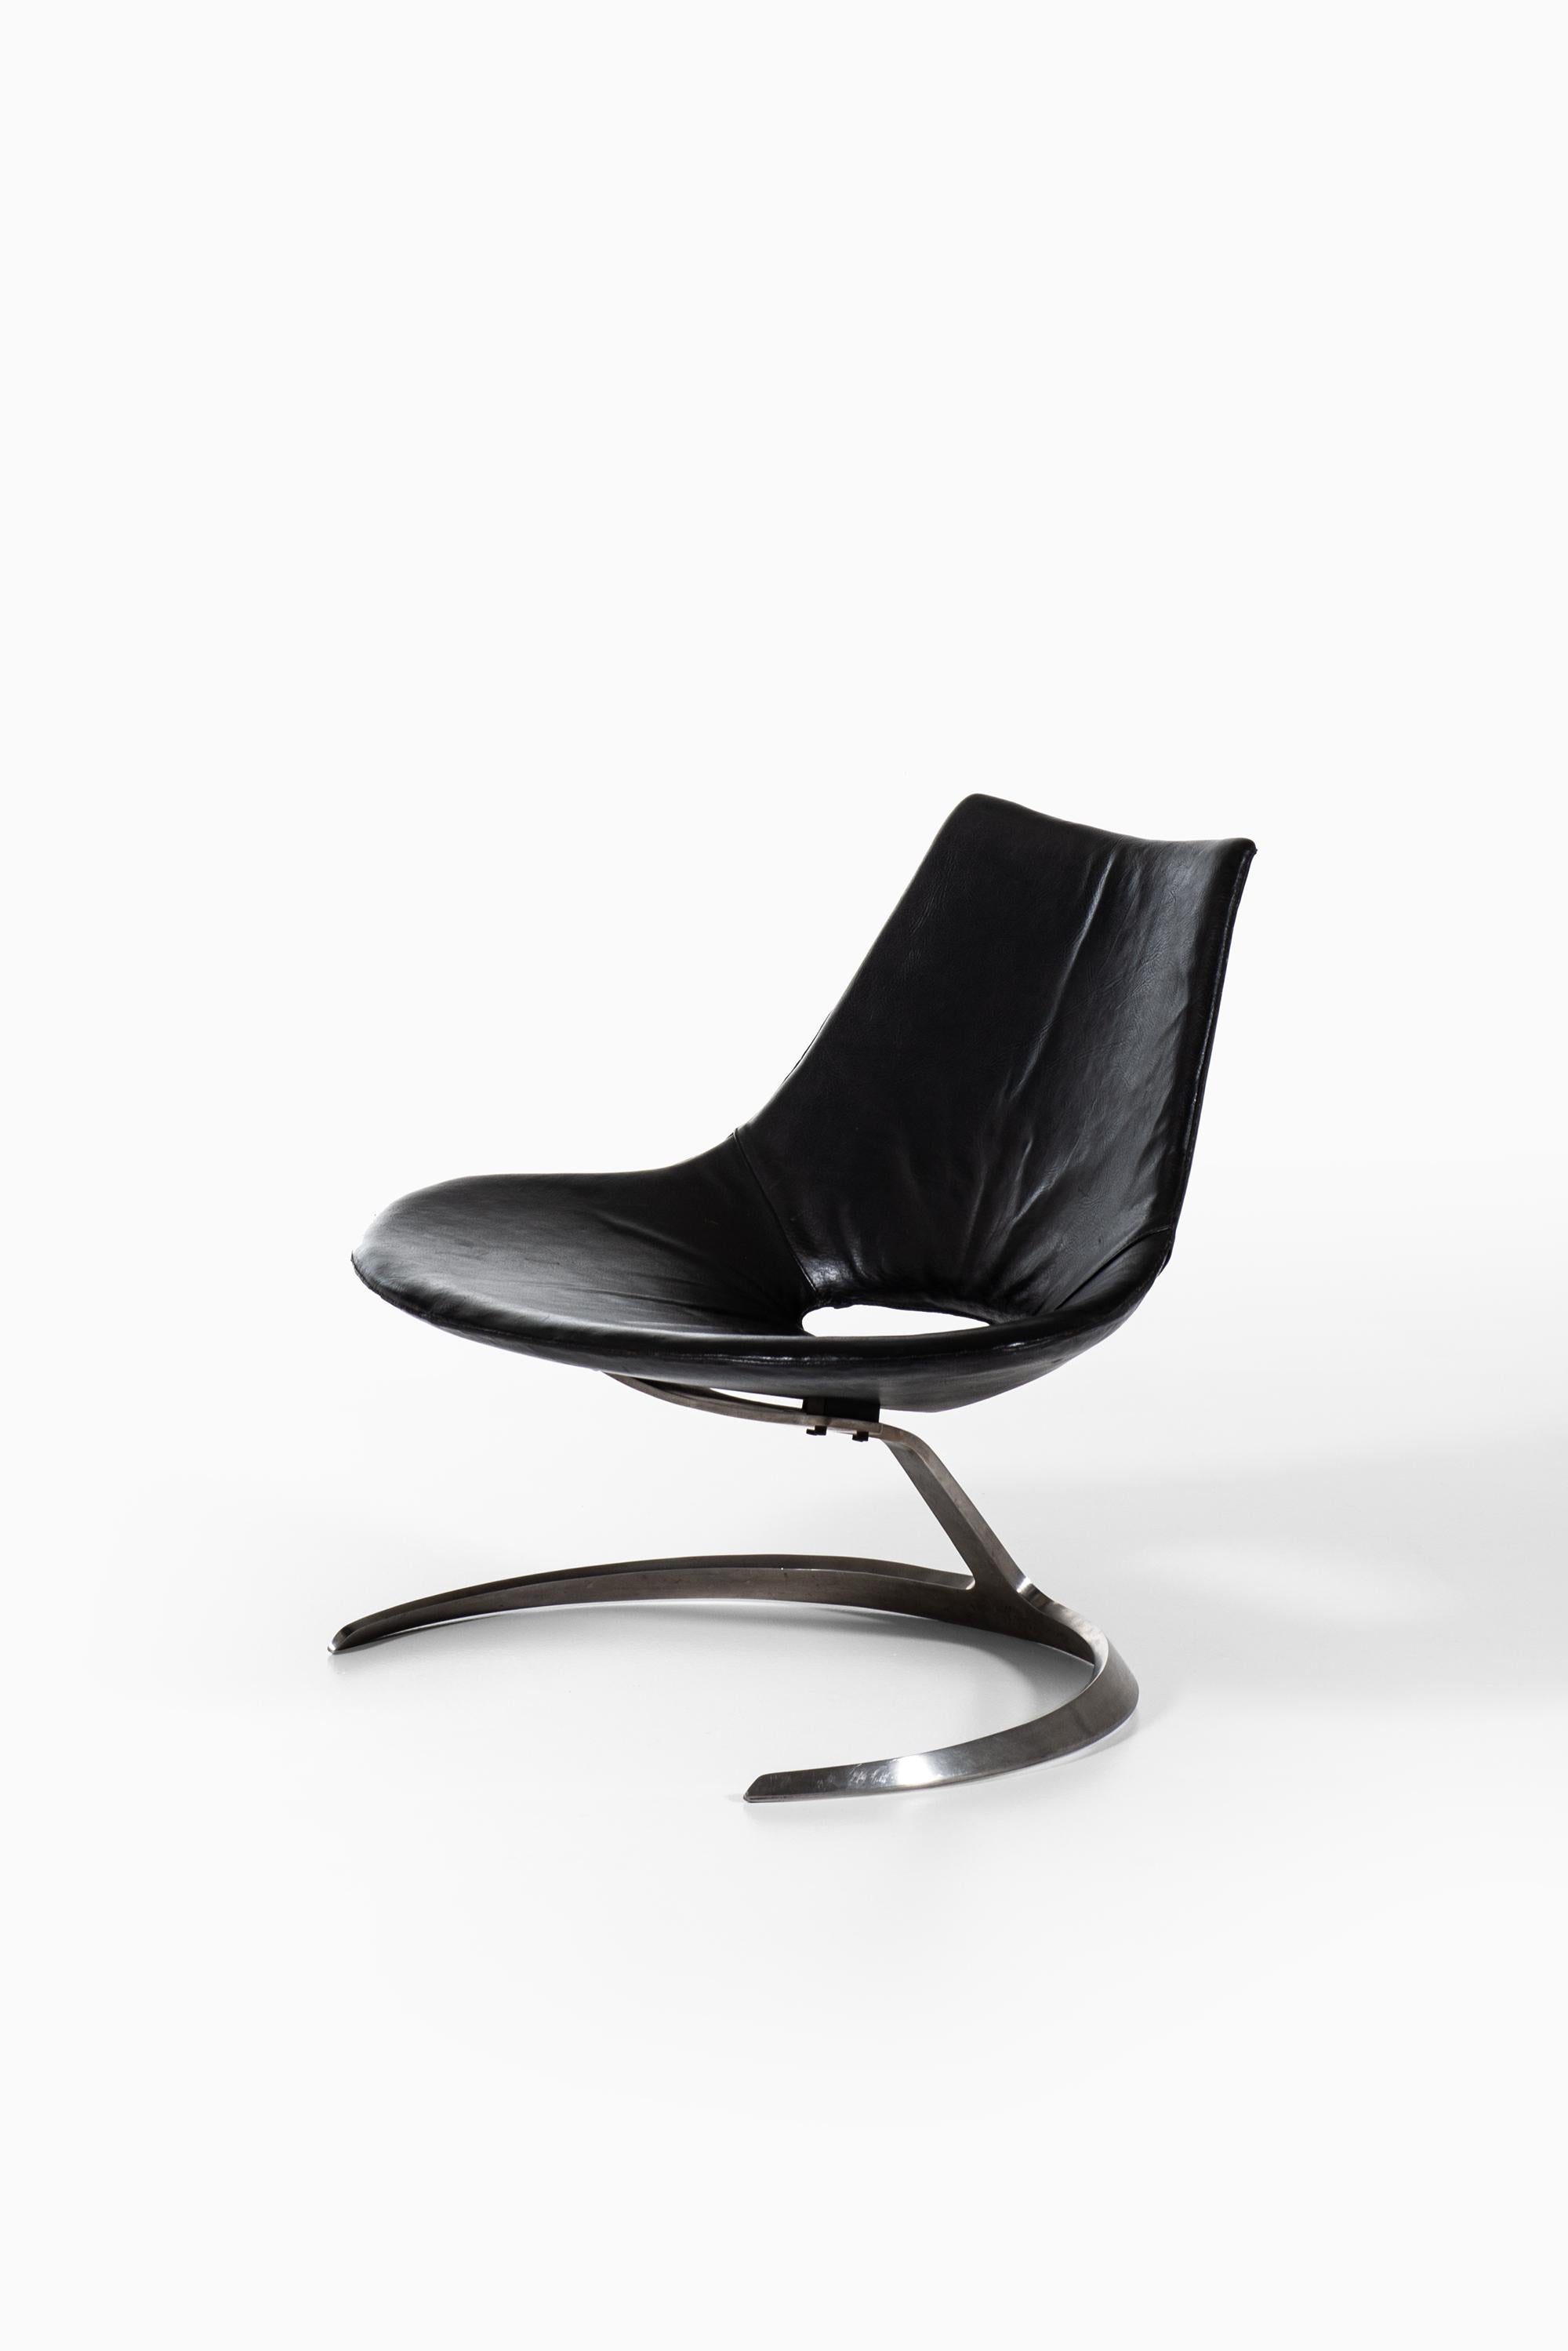 Mid-20th Century Preben Fabricius & Jørgen Kastholm Scimitar Easy Chair by Ivan Schlecter For Sale